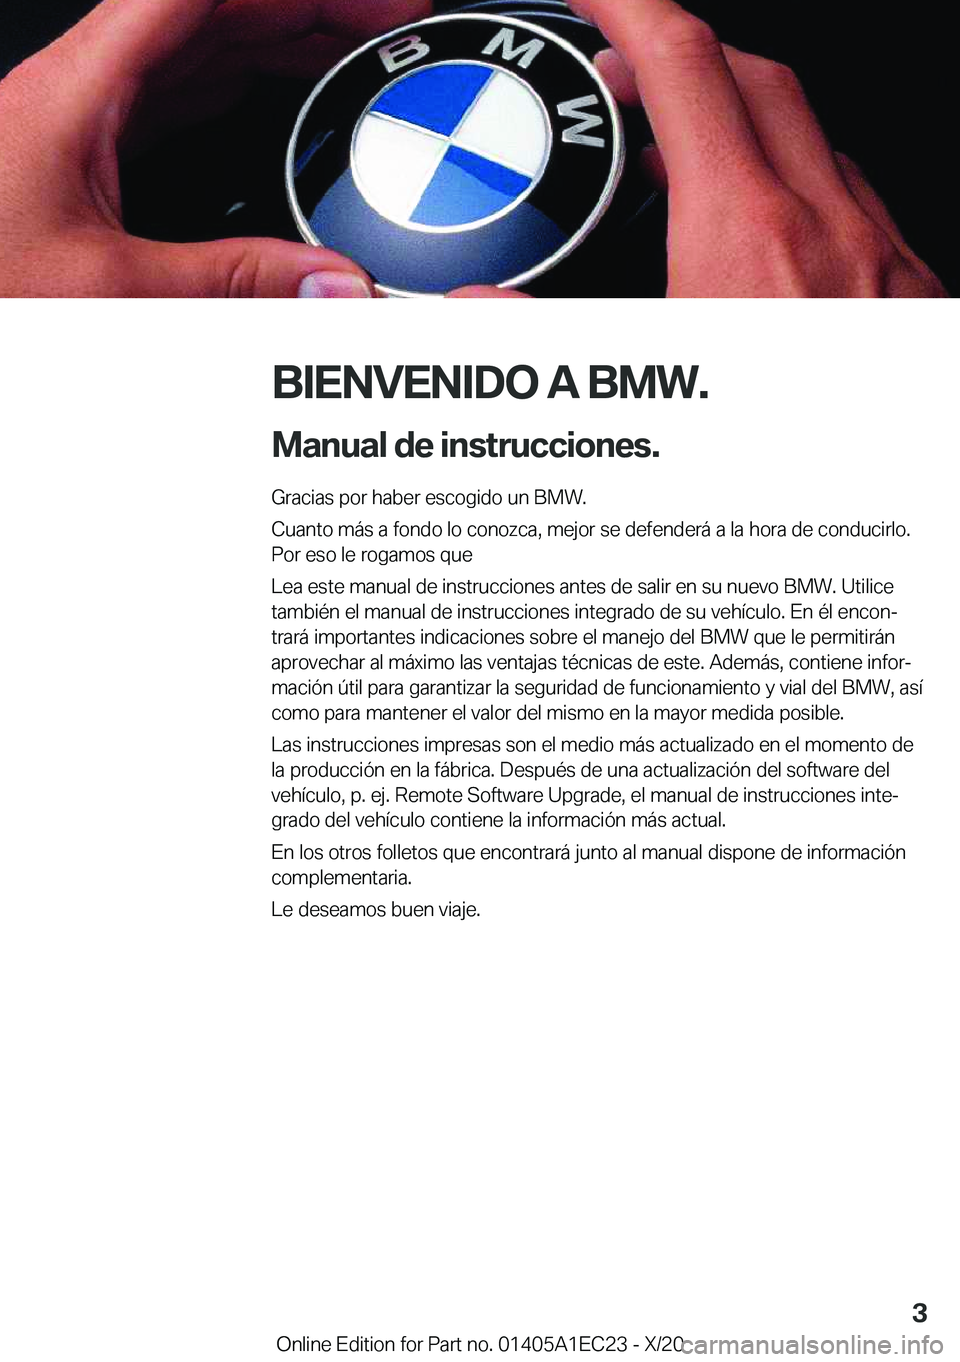 BMW 8 SERIES GRAN COUPE 2021  Manuales de Empleo (in Spanish) �B�I�E�N�V�E�N�I�D�O��A��B�M�W�.
�M�a�n�u�a�l��d�e��i�n�s�t�r�u�c�c�i�o�n�e�s�. �G�r�a�c�i�a�s��p�o�r��h�a�b�e�r��e�s�c�o�g�i�d�o��u�n��B�M�W�.
�C�u�a�n�t�o��m�